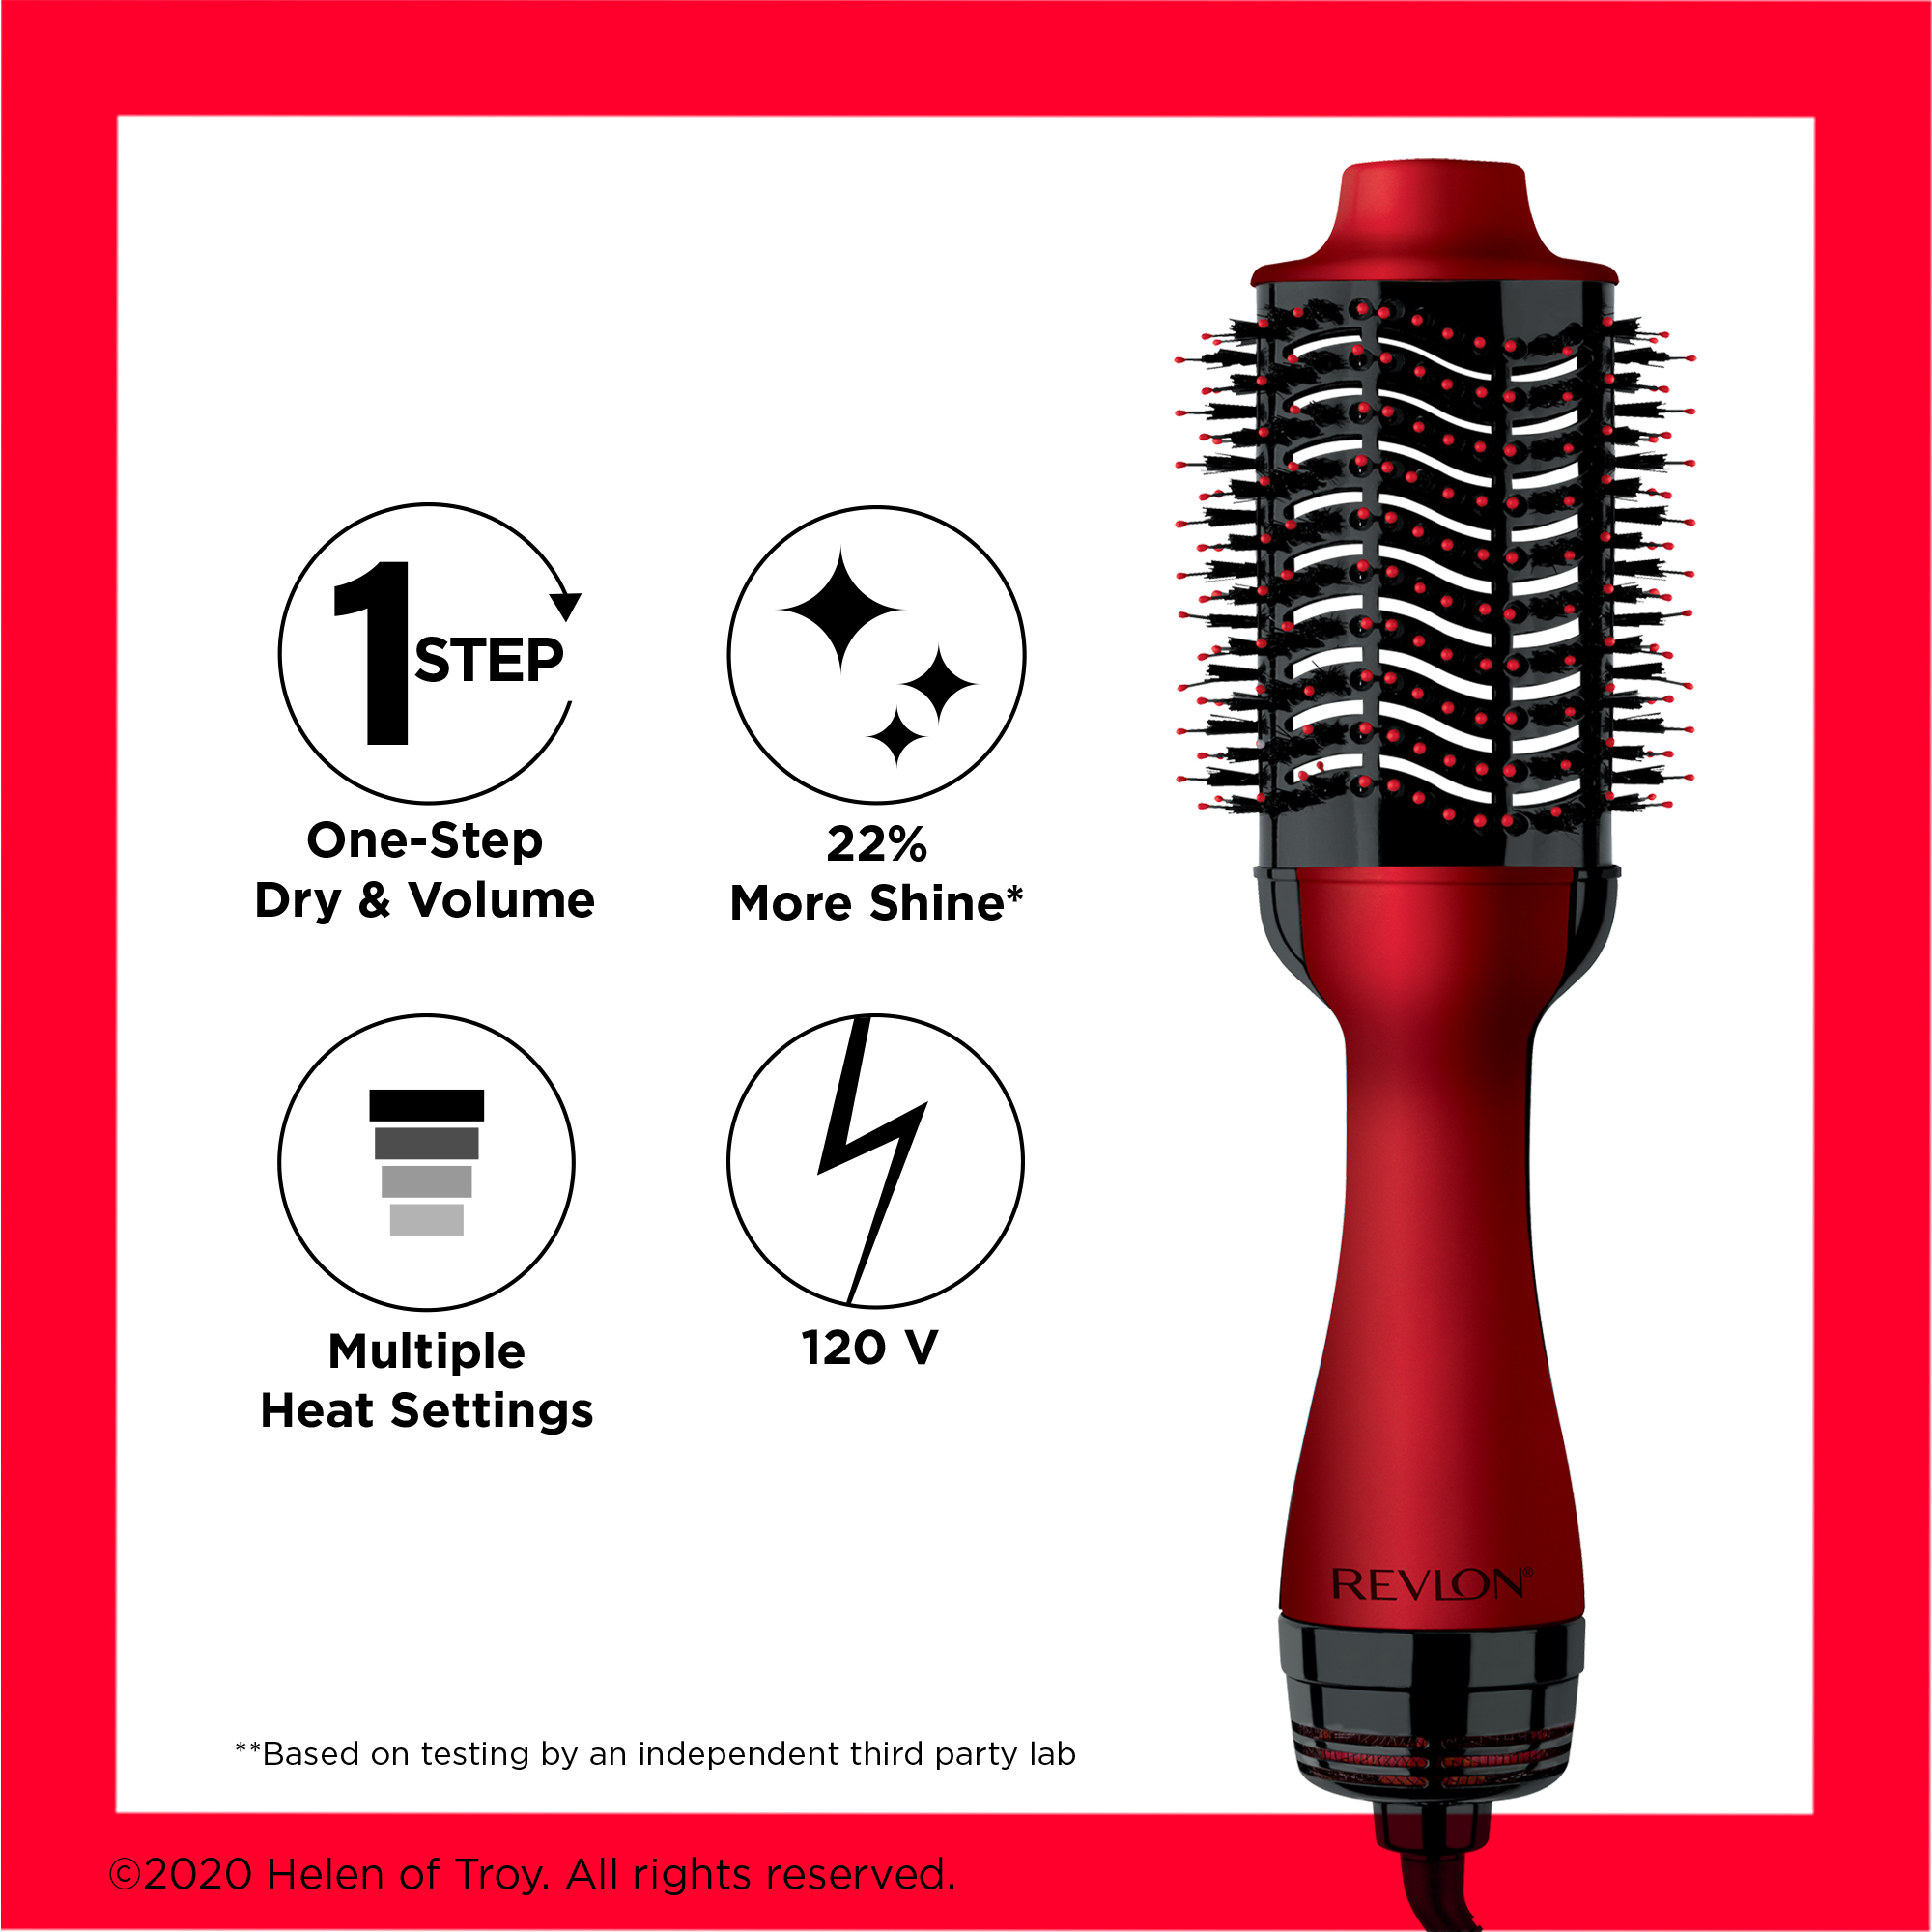 Revlon One-Step Ceramic Hair Dryer & Volumizer Hot Air Brush, Red - image 2 of 7